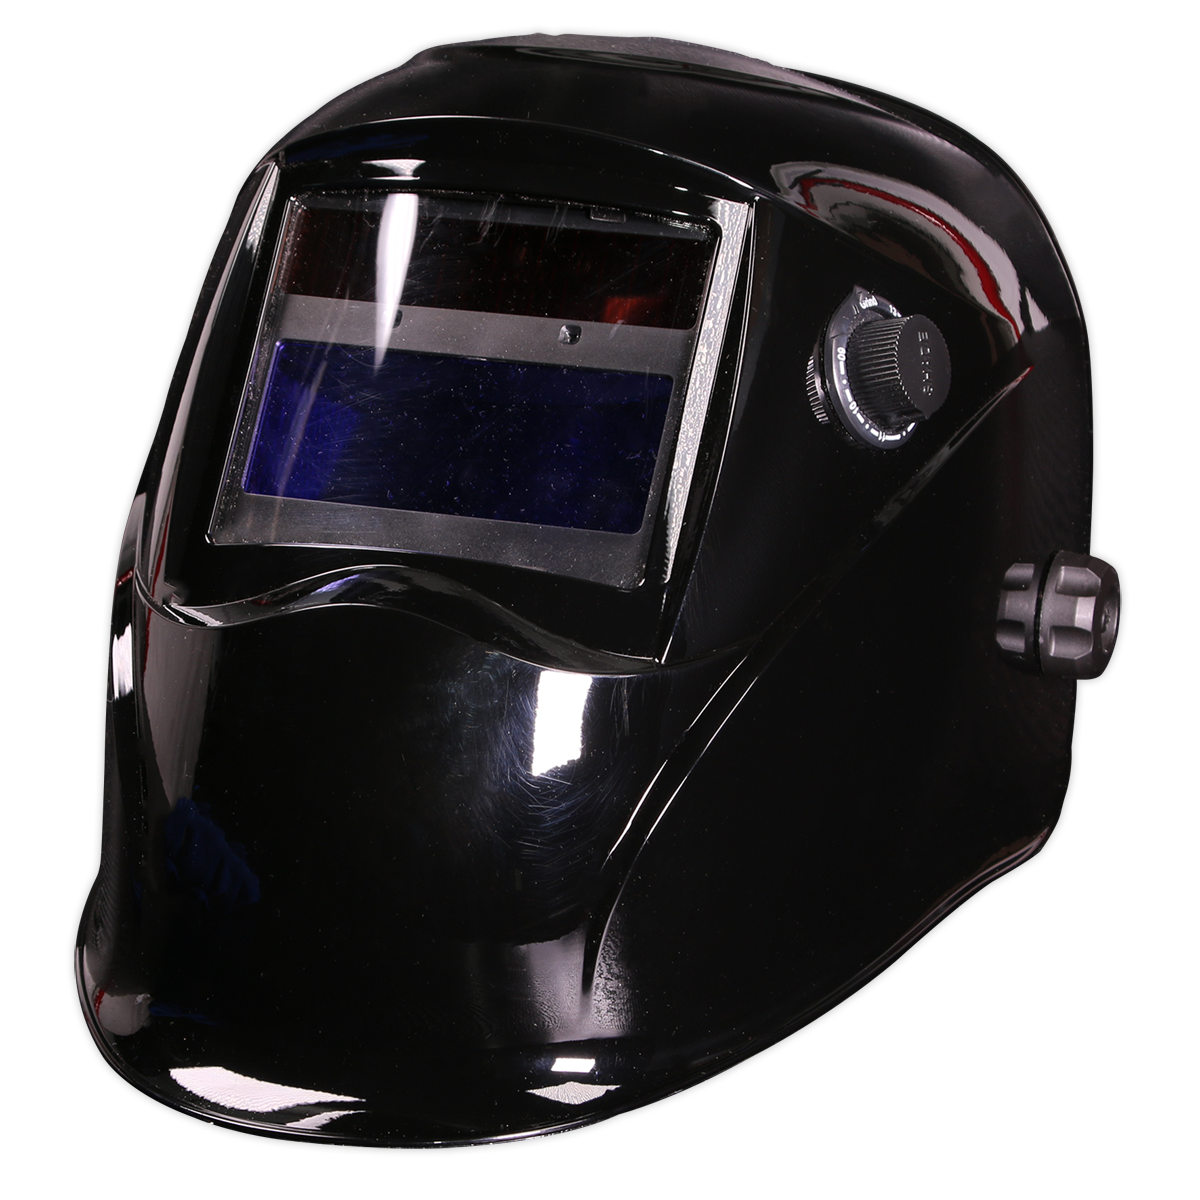 Welding Helmet Auto Darkening - Shade 9-13 - Black - PWH610 - Farming Parts